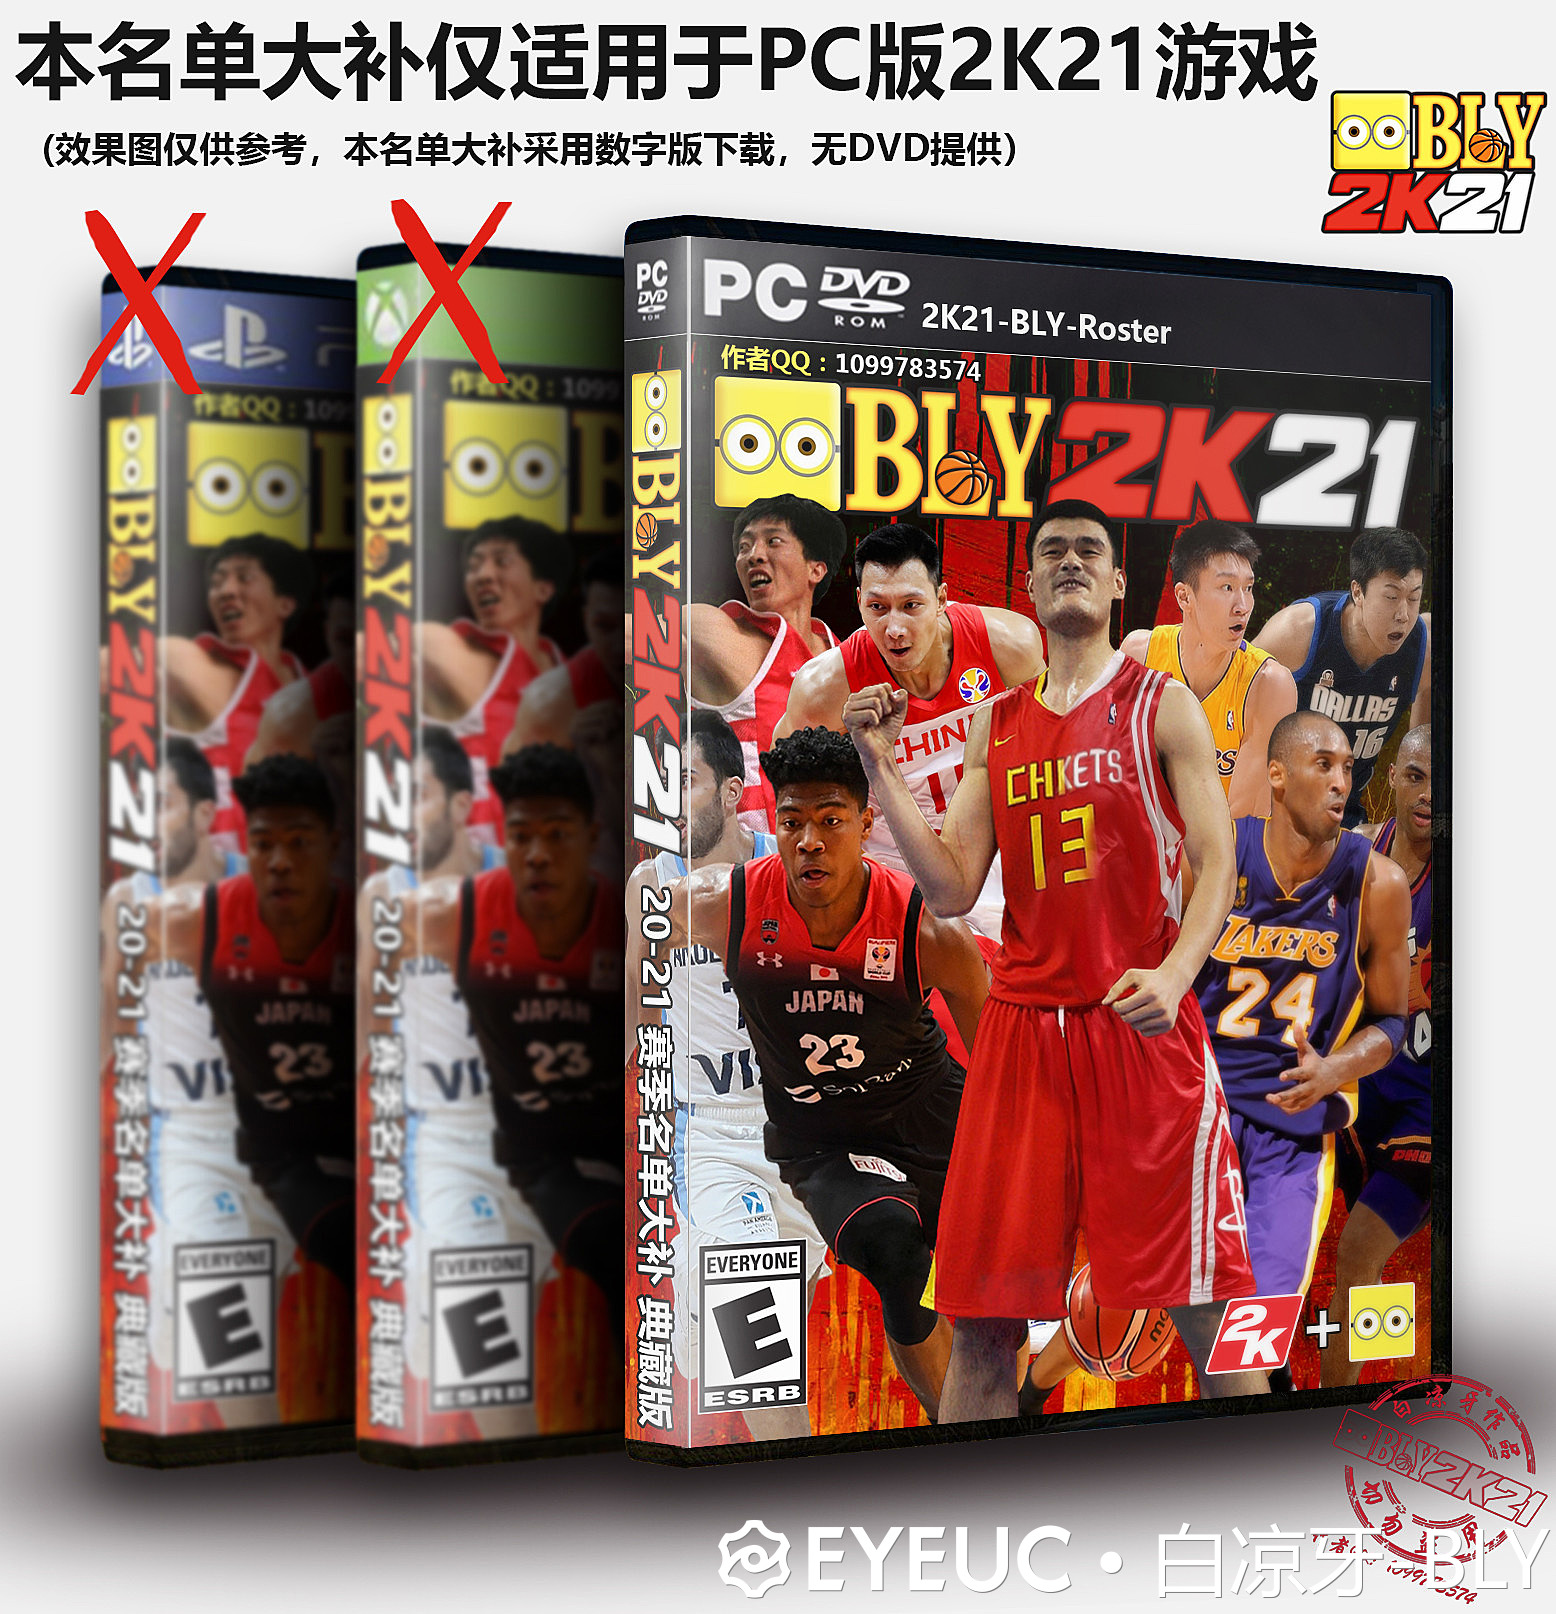 DVD 2K21 BLY.jpg